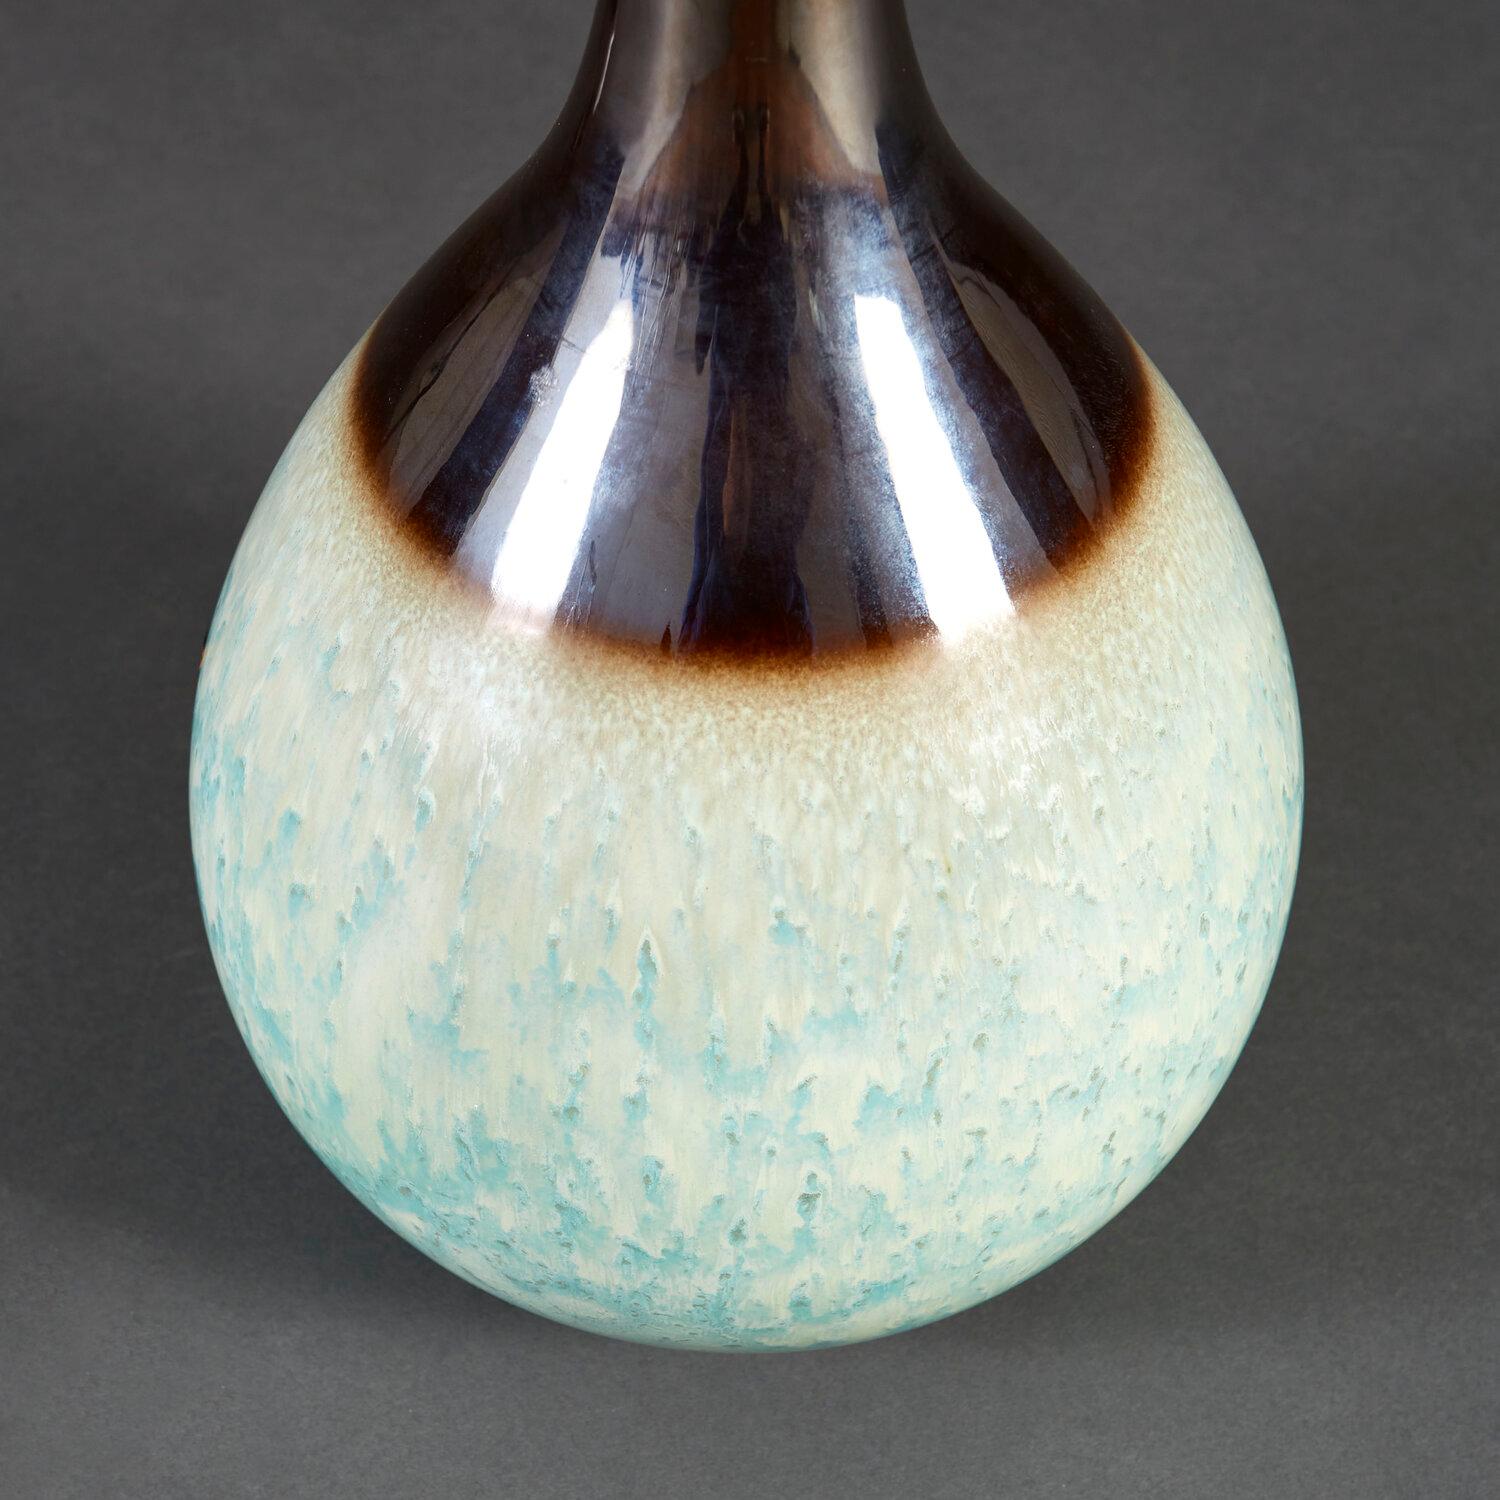 Glazed 1970s French Studio Pottery Bottle Vase as a Table Lamp